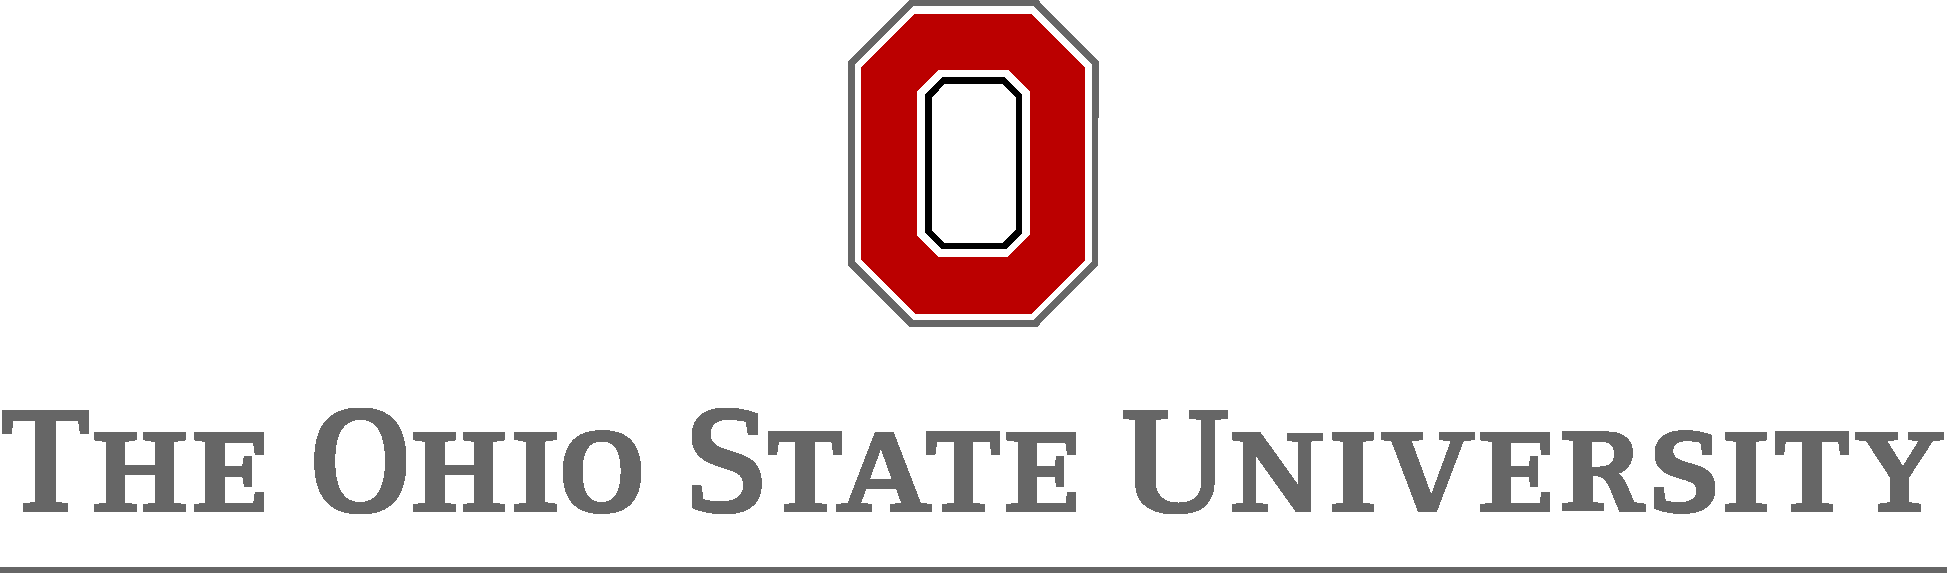 The Ohio State University - logo